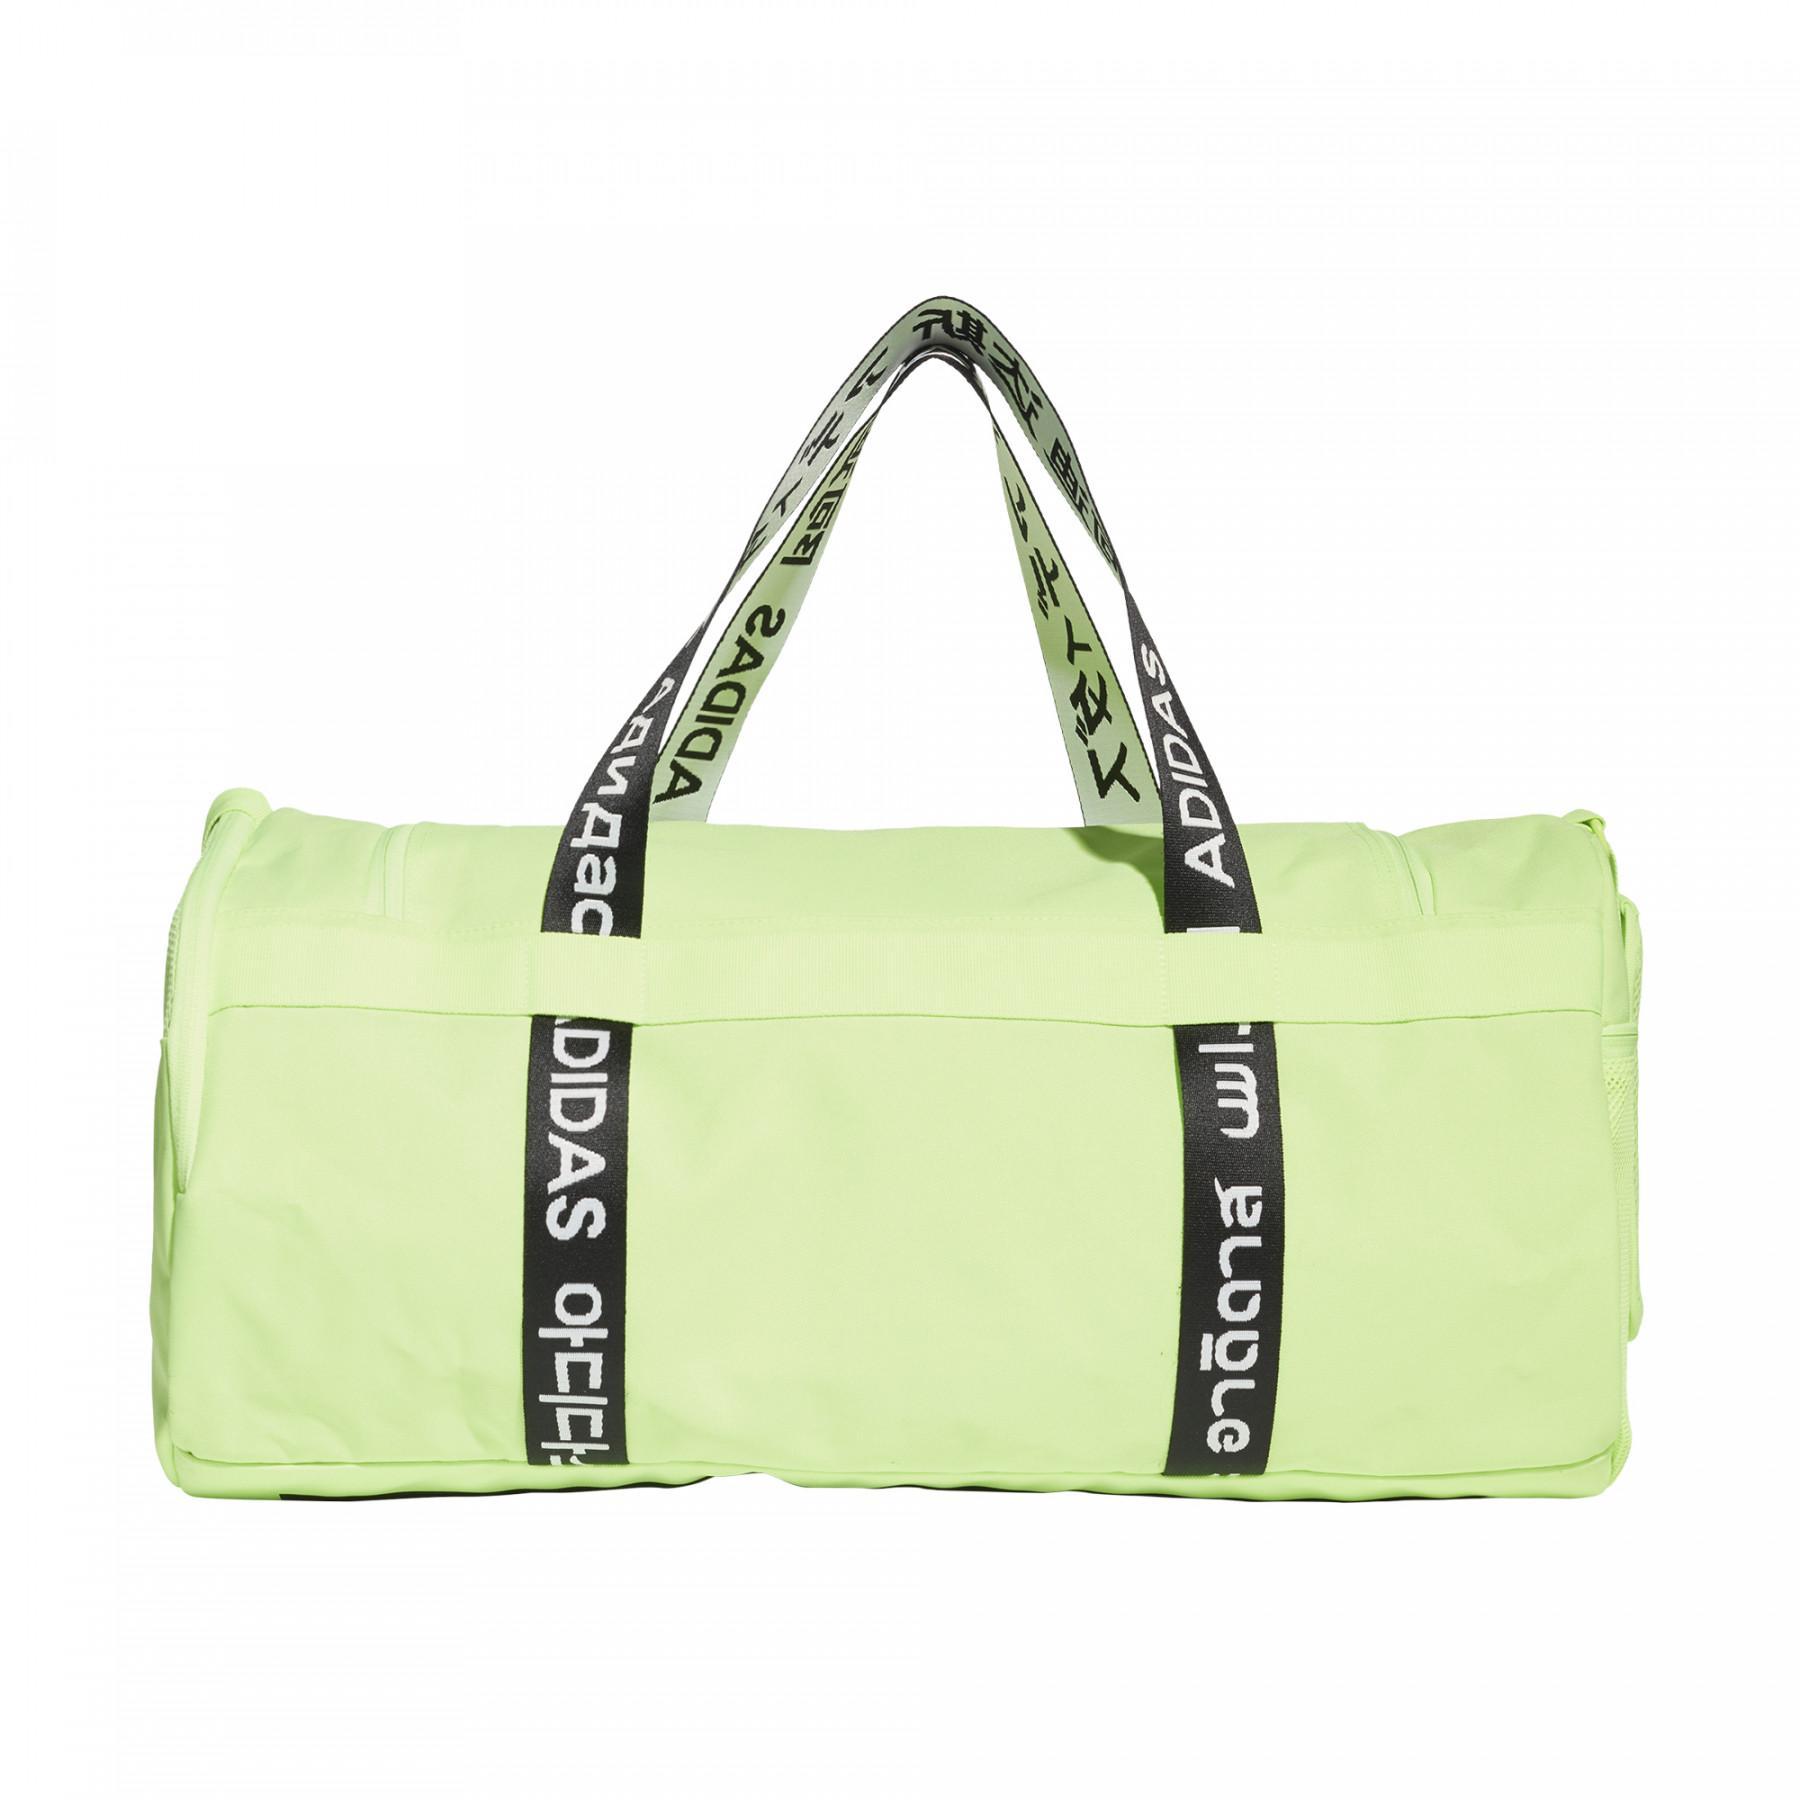 Travel bag adidas 4ATHLTS Duffel Bag M